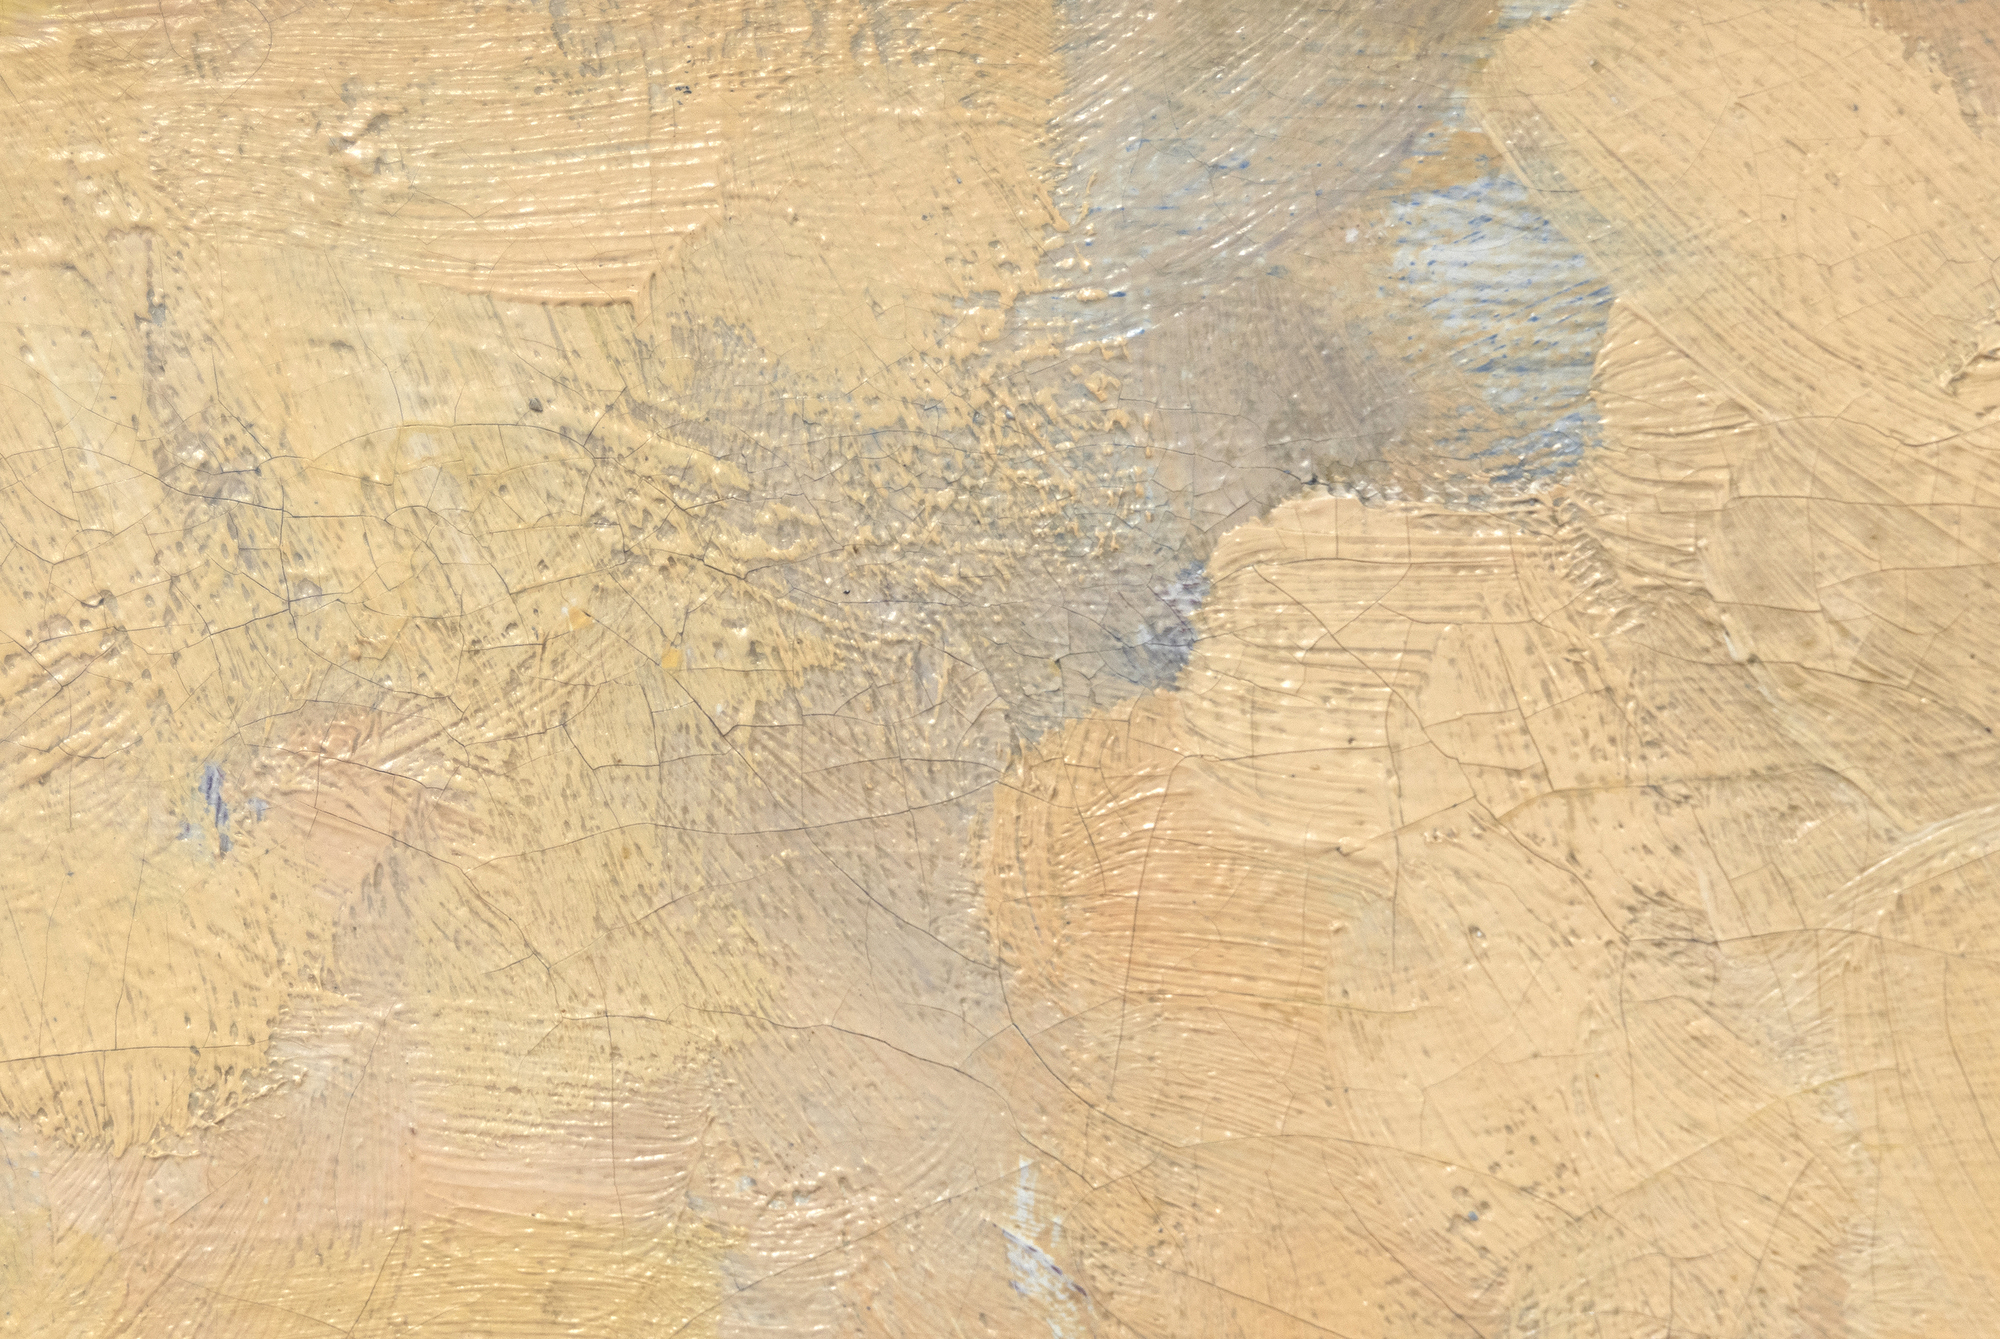 EDGAR ALWIN PAYNE - Navajos au repos - huile sur toile - 19 1/2 x 23 1/2 in.